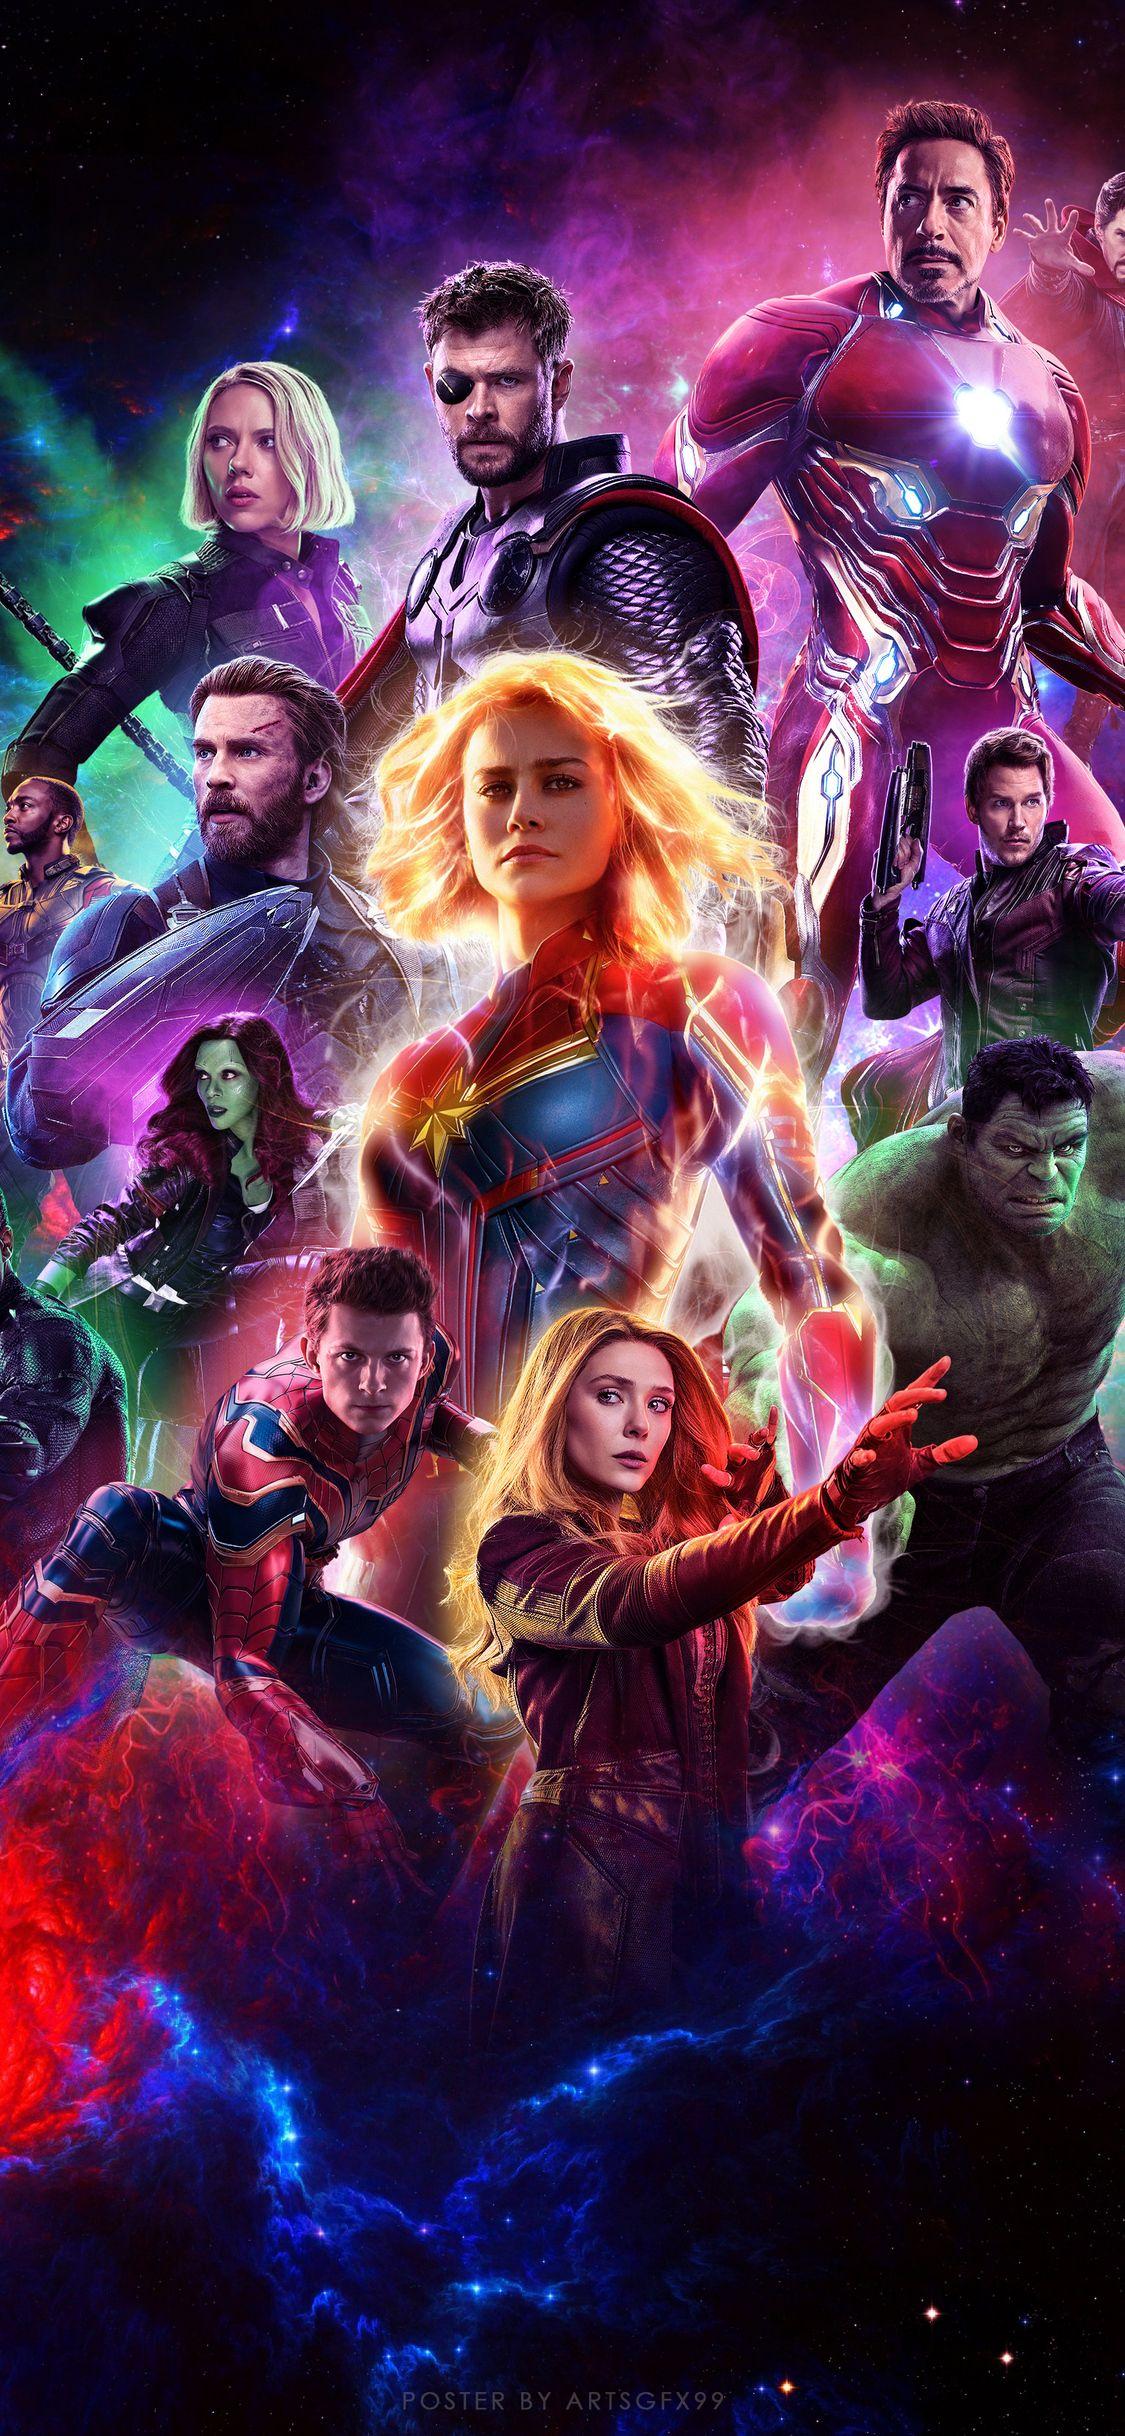 Avengers Endgame 2019 iPhone XS, iPhone iPhone X